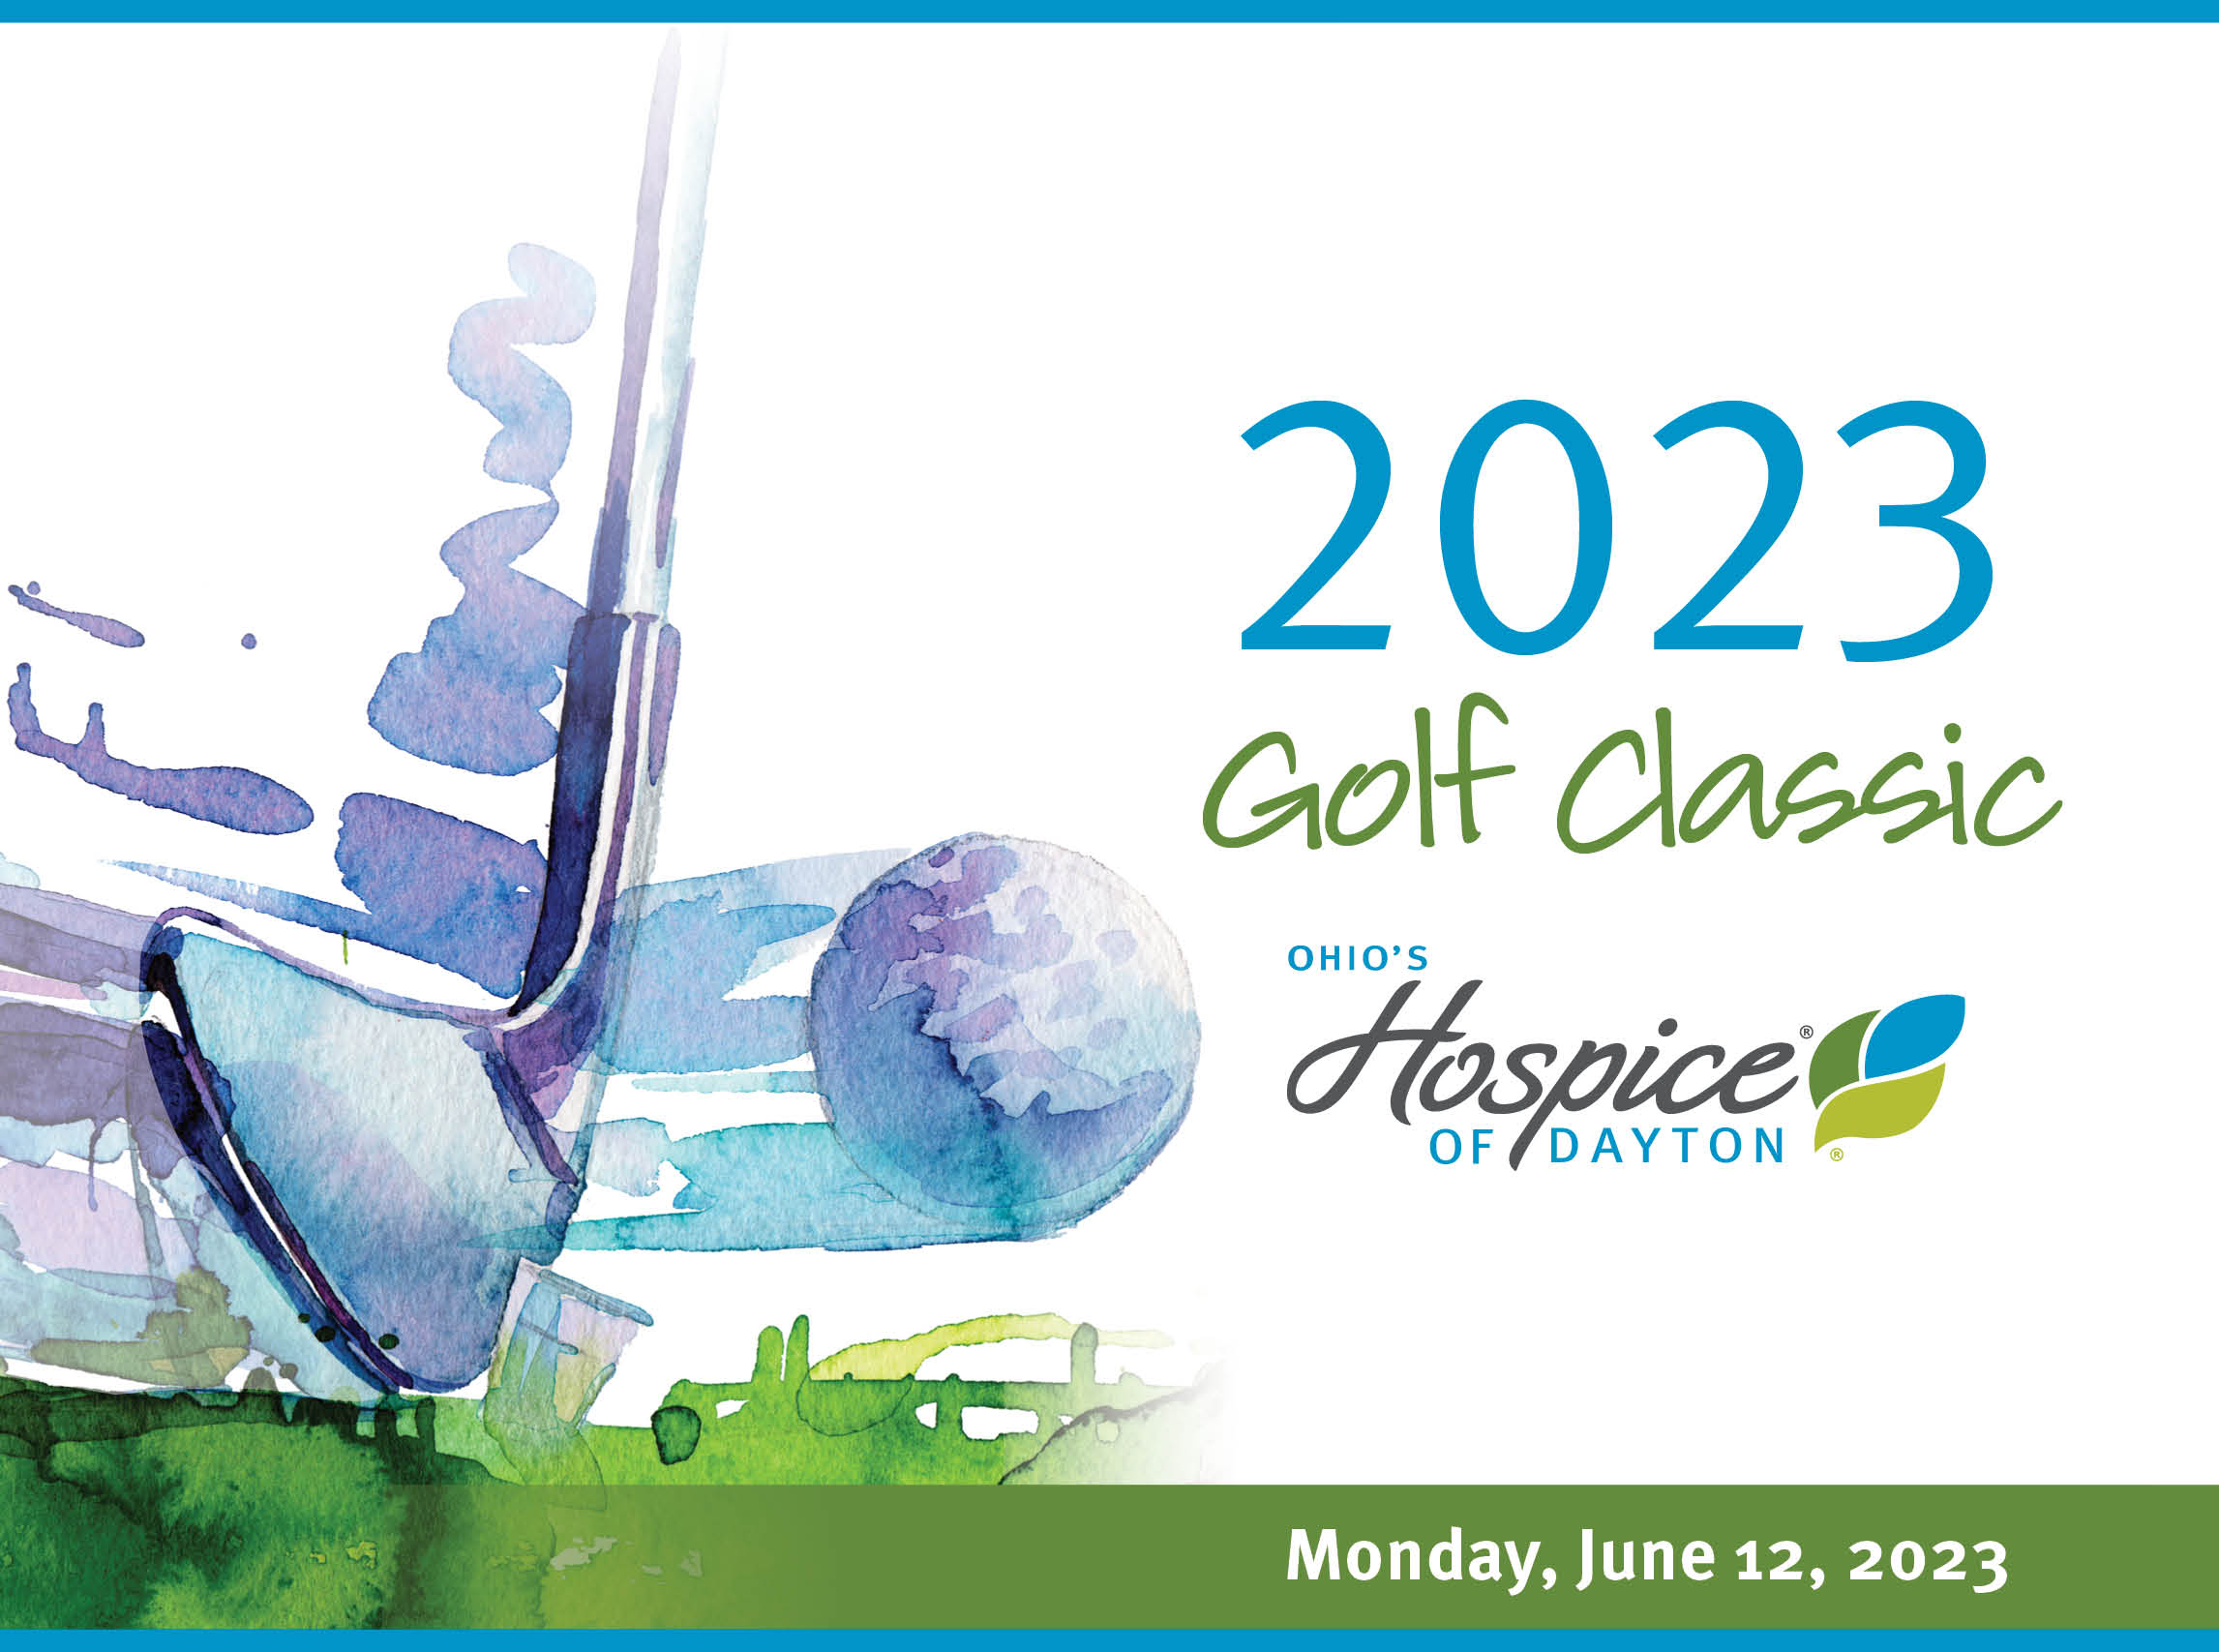 2023 Golf Classic Ohio's Hospice of Dayton Monday, June 12, 2023